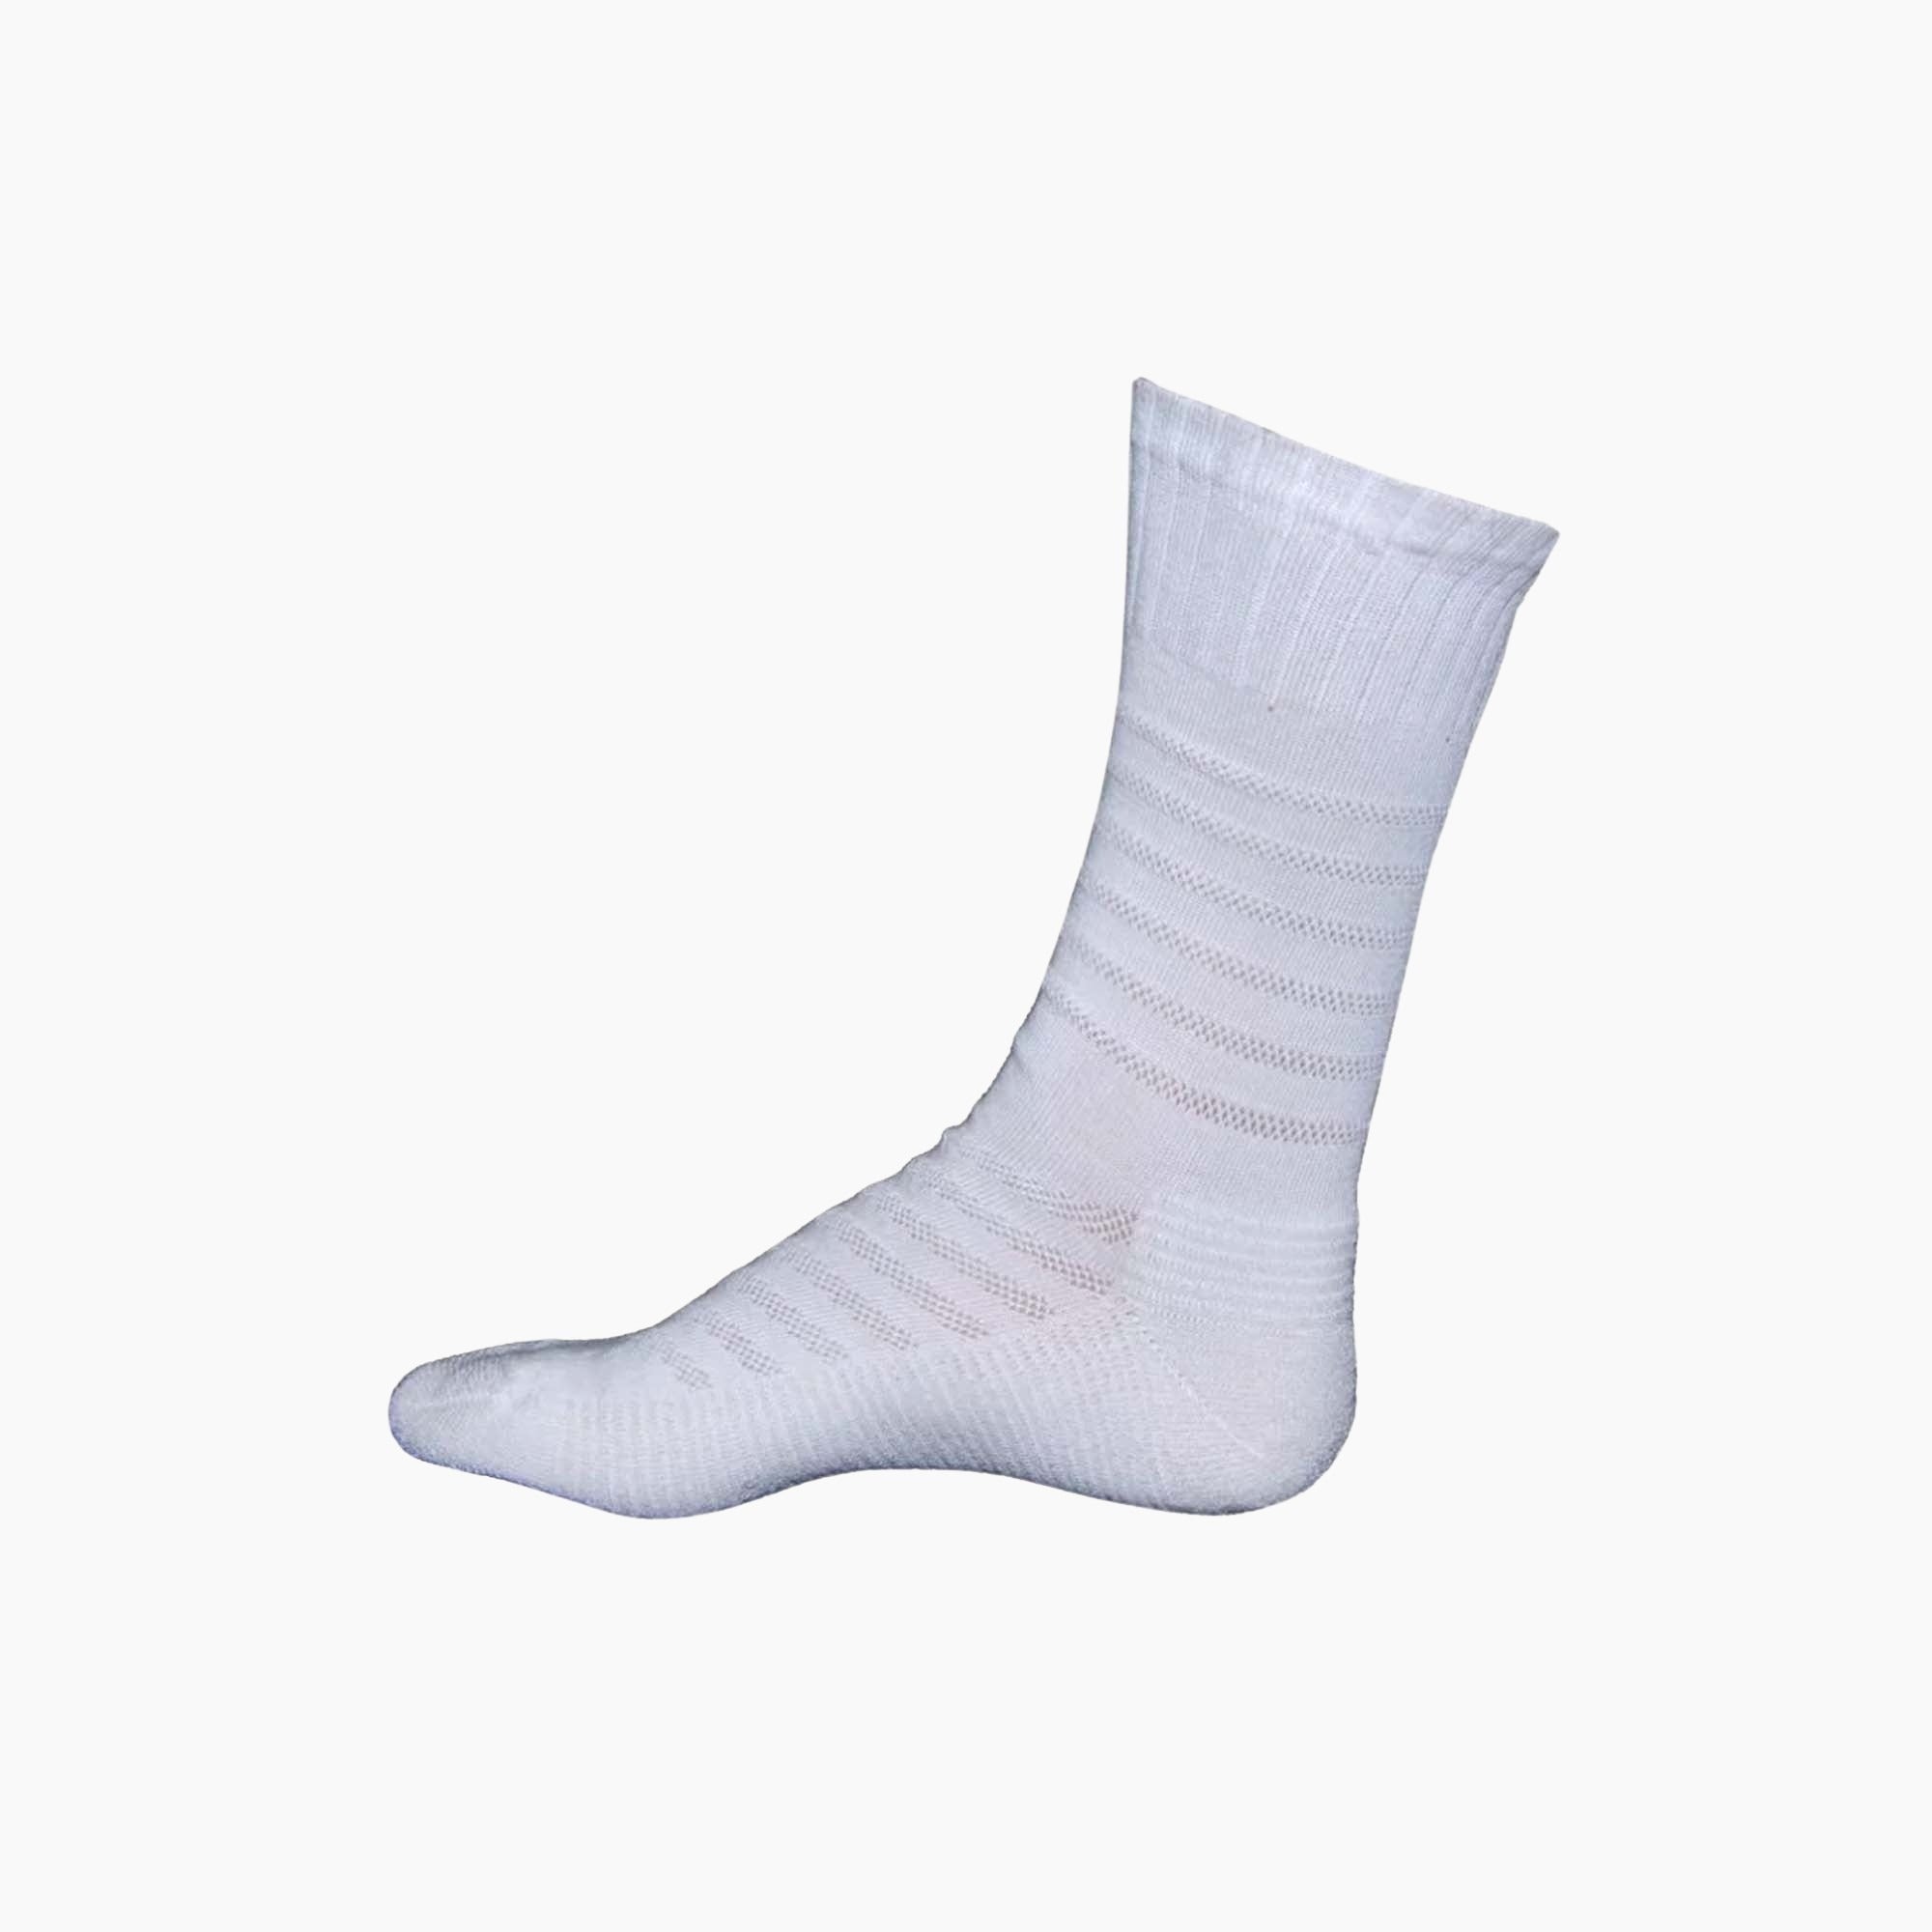 Stand 21 | Heat Stress Control Socks-Racing Underwear-STAND 21-gpx-store